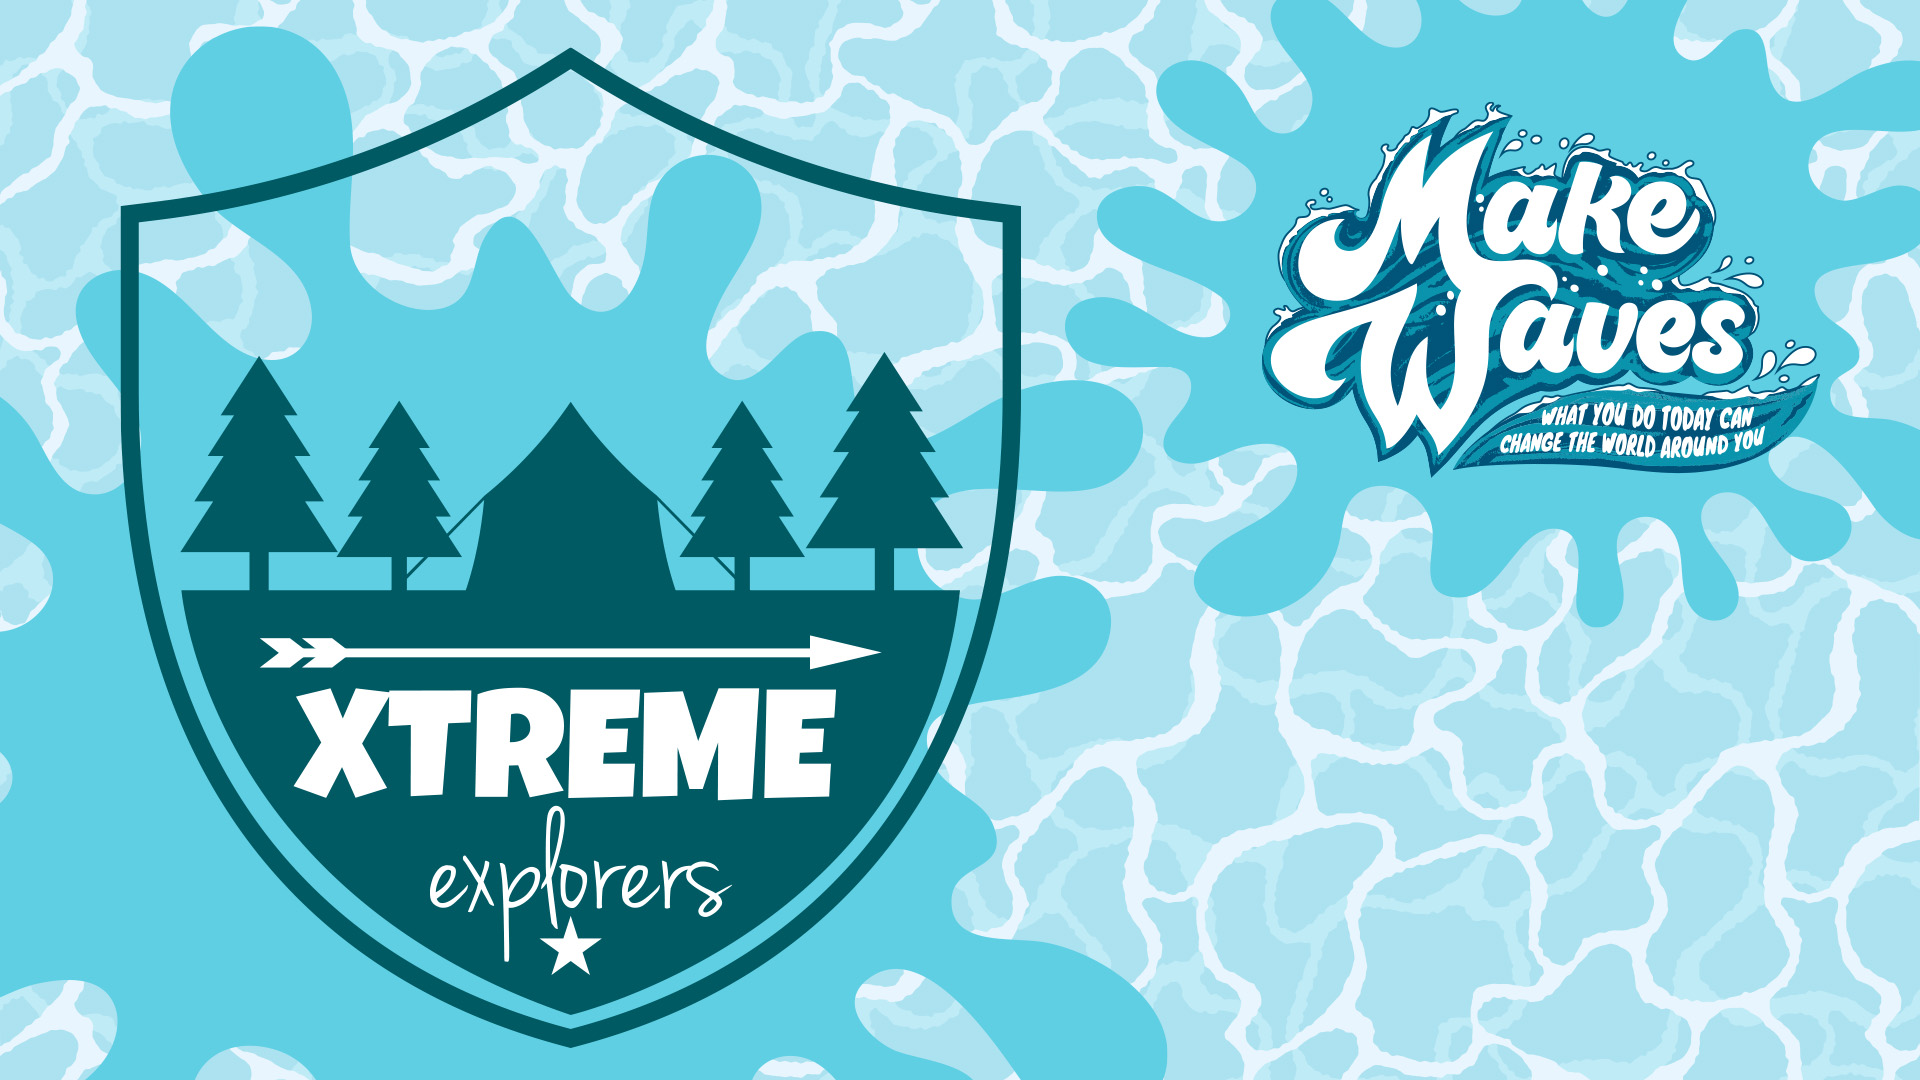 Xtreme Explorers

July 25-28
9:00 - 11:30am
